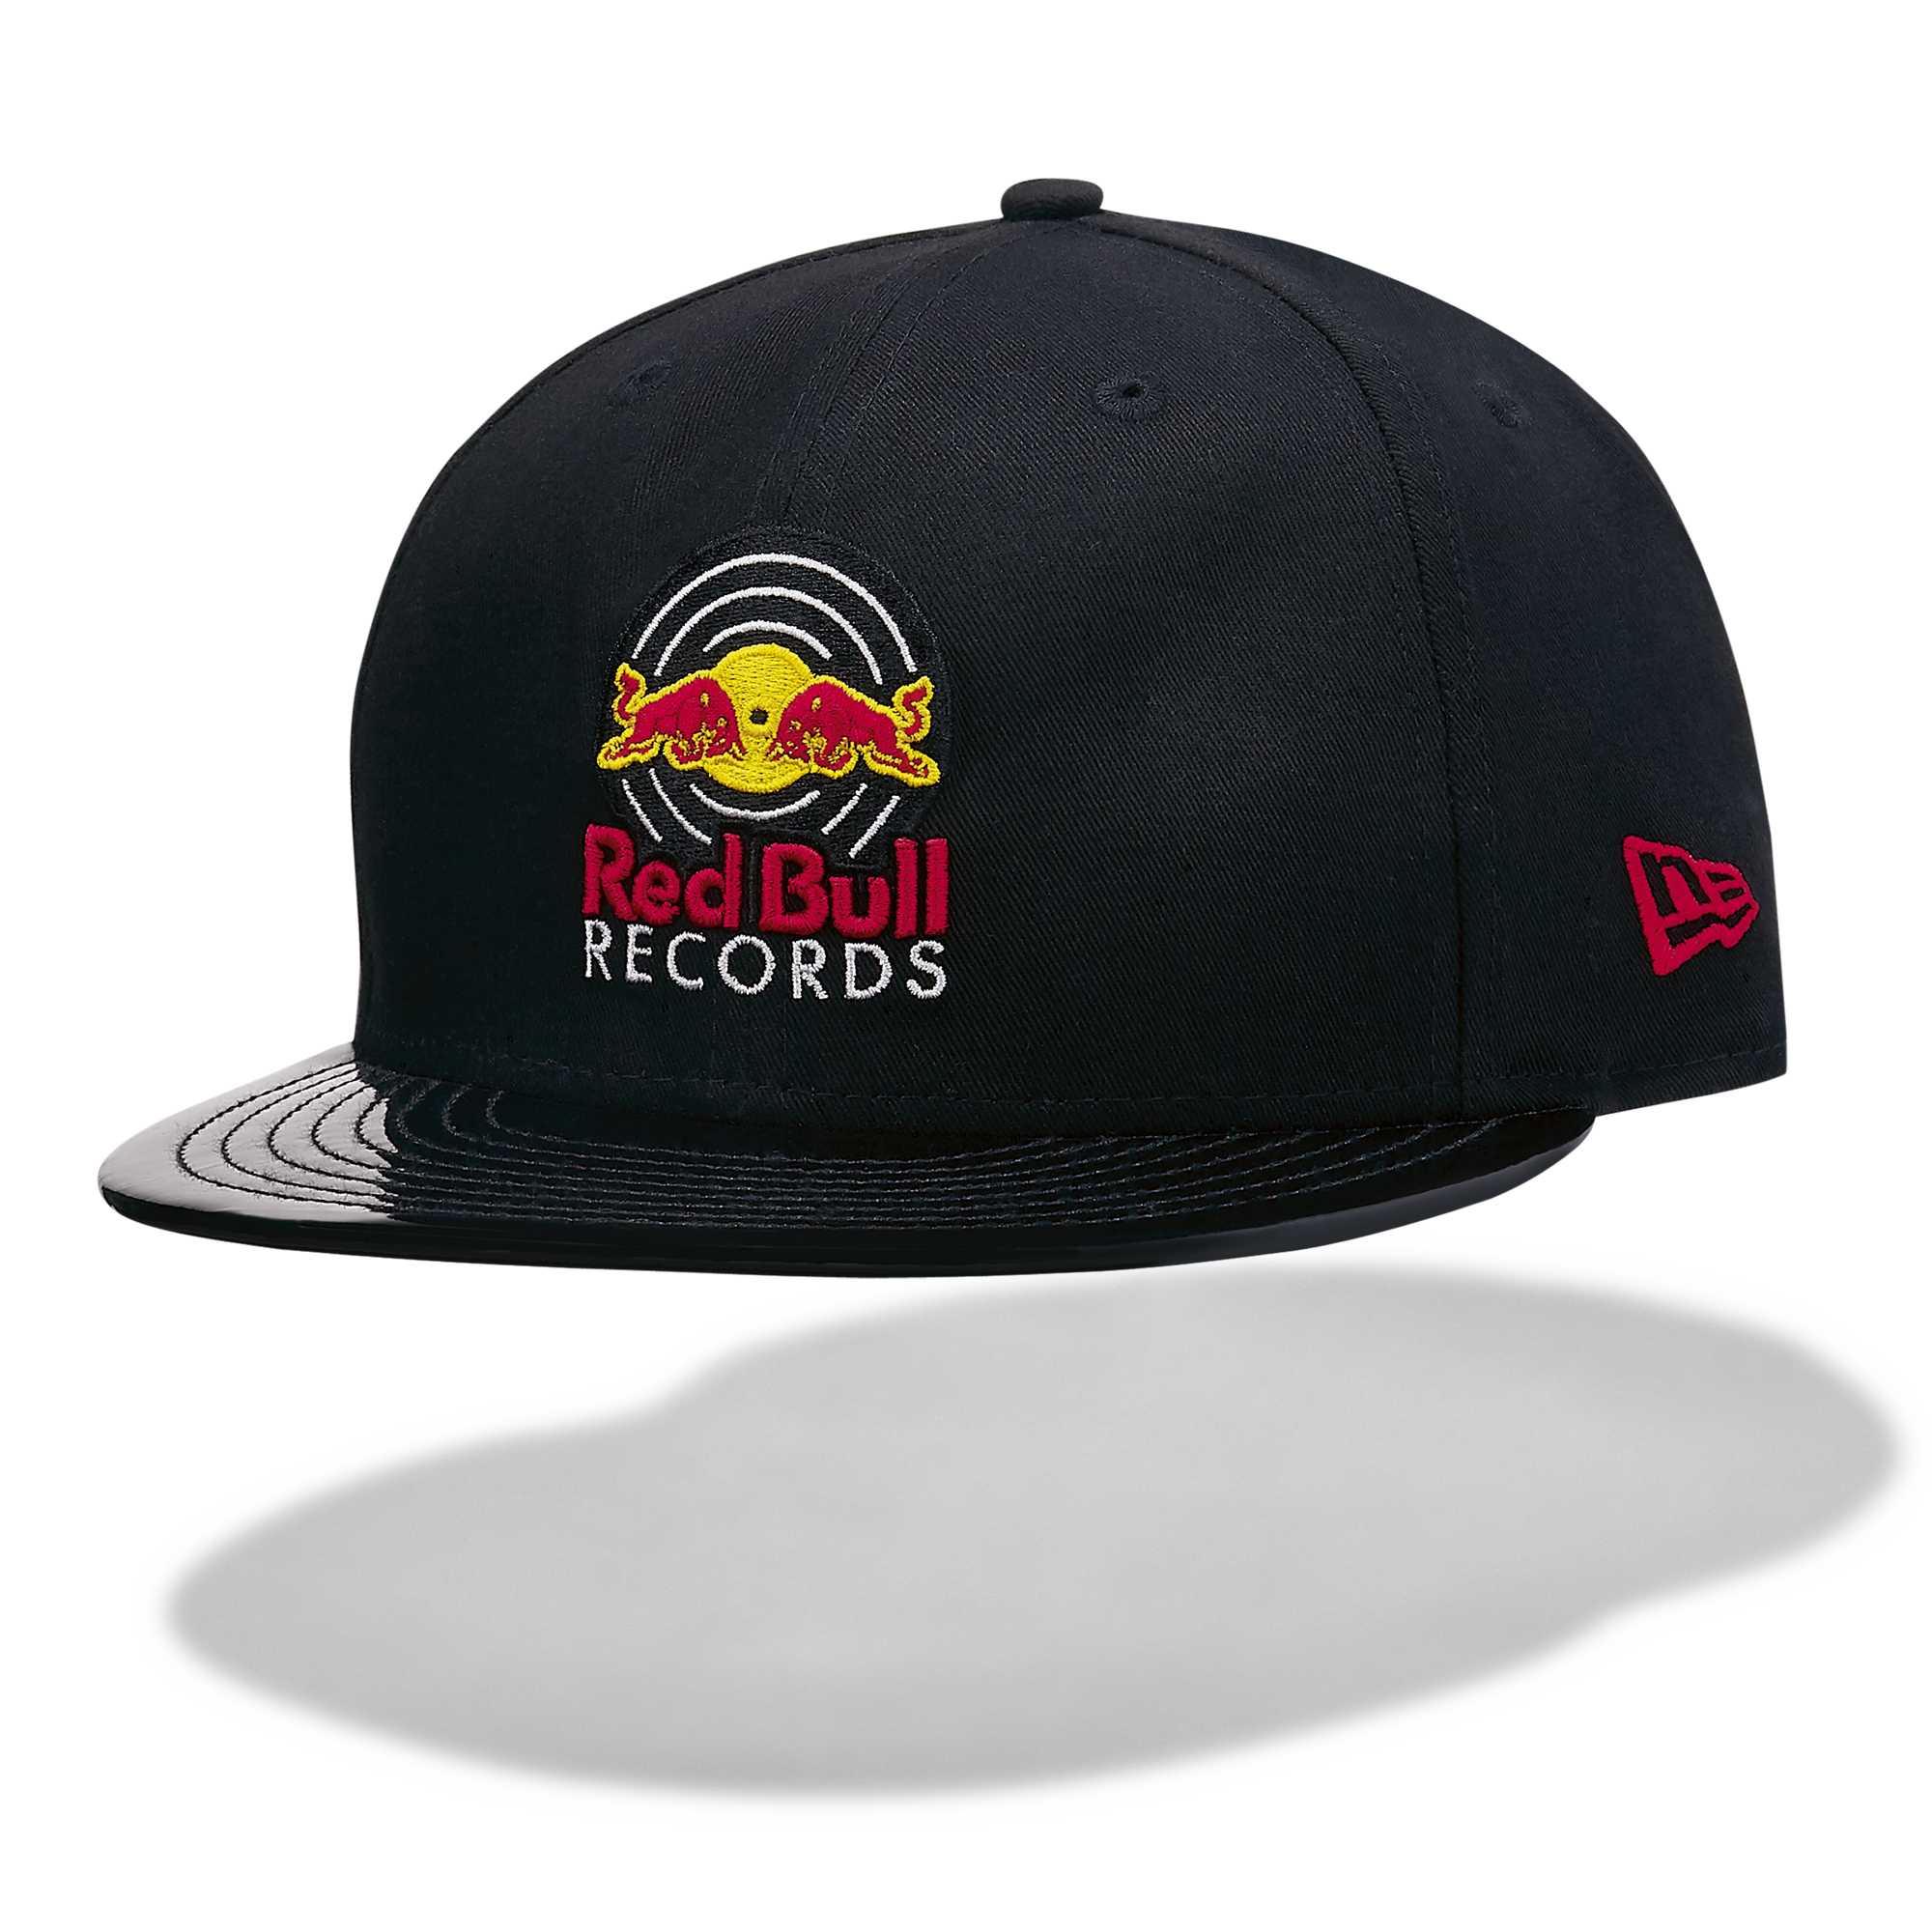 Red Bull Records - New Era Vinyl Flat Cap